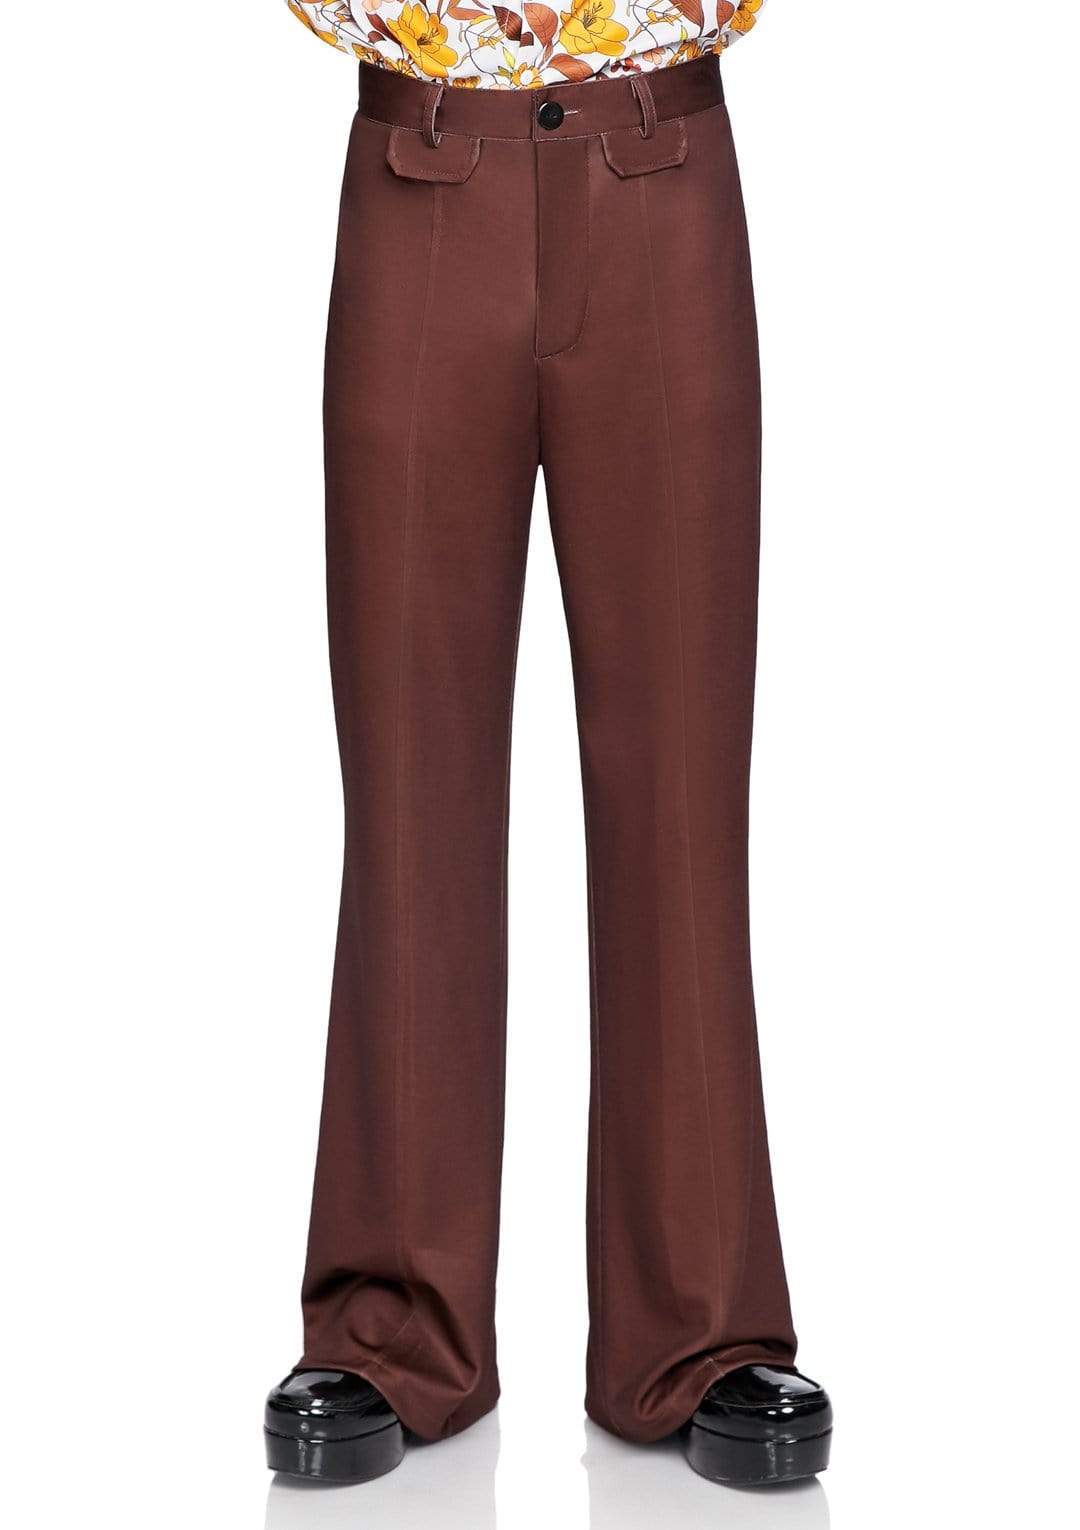 1970s Disco Bell Bottom Costume Pants